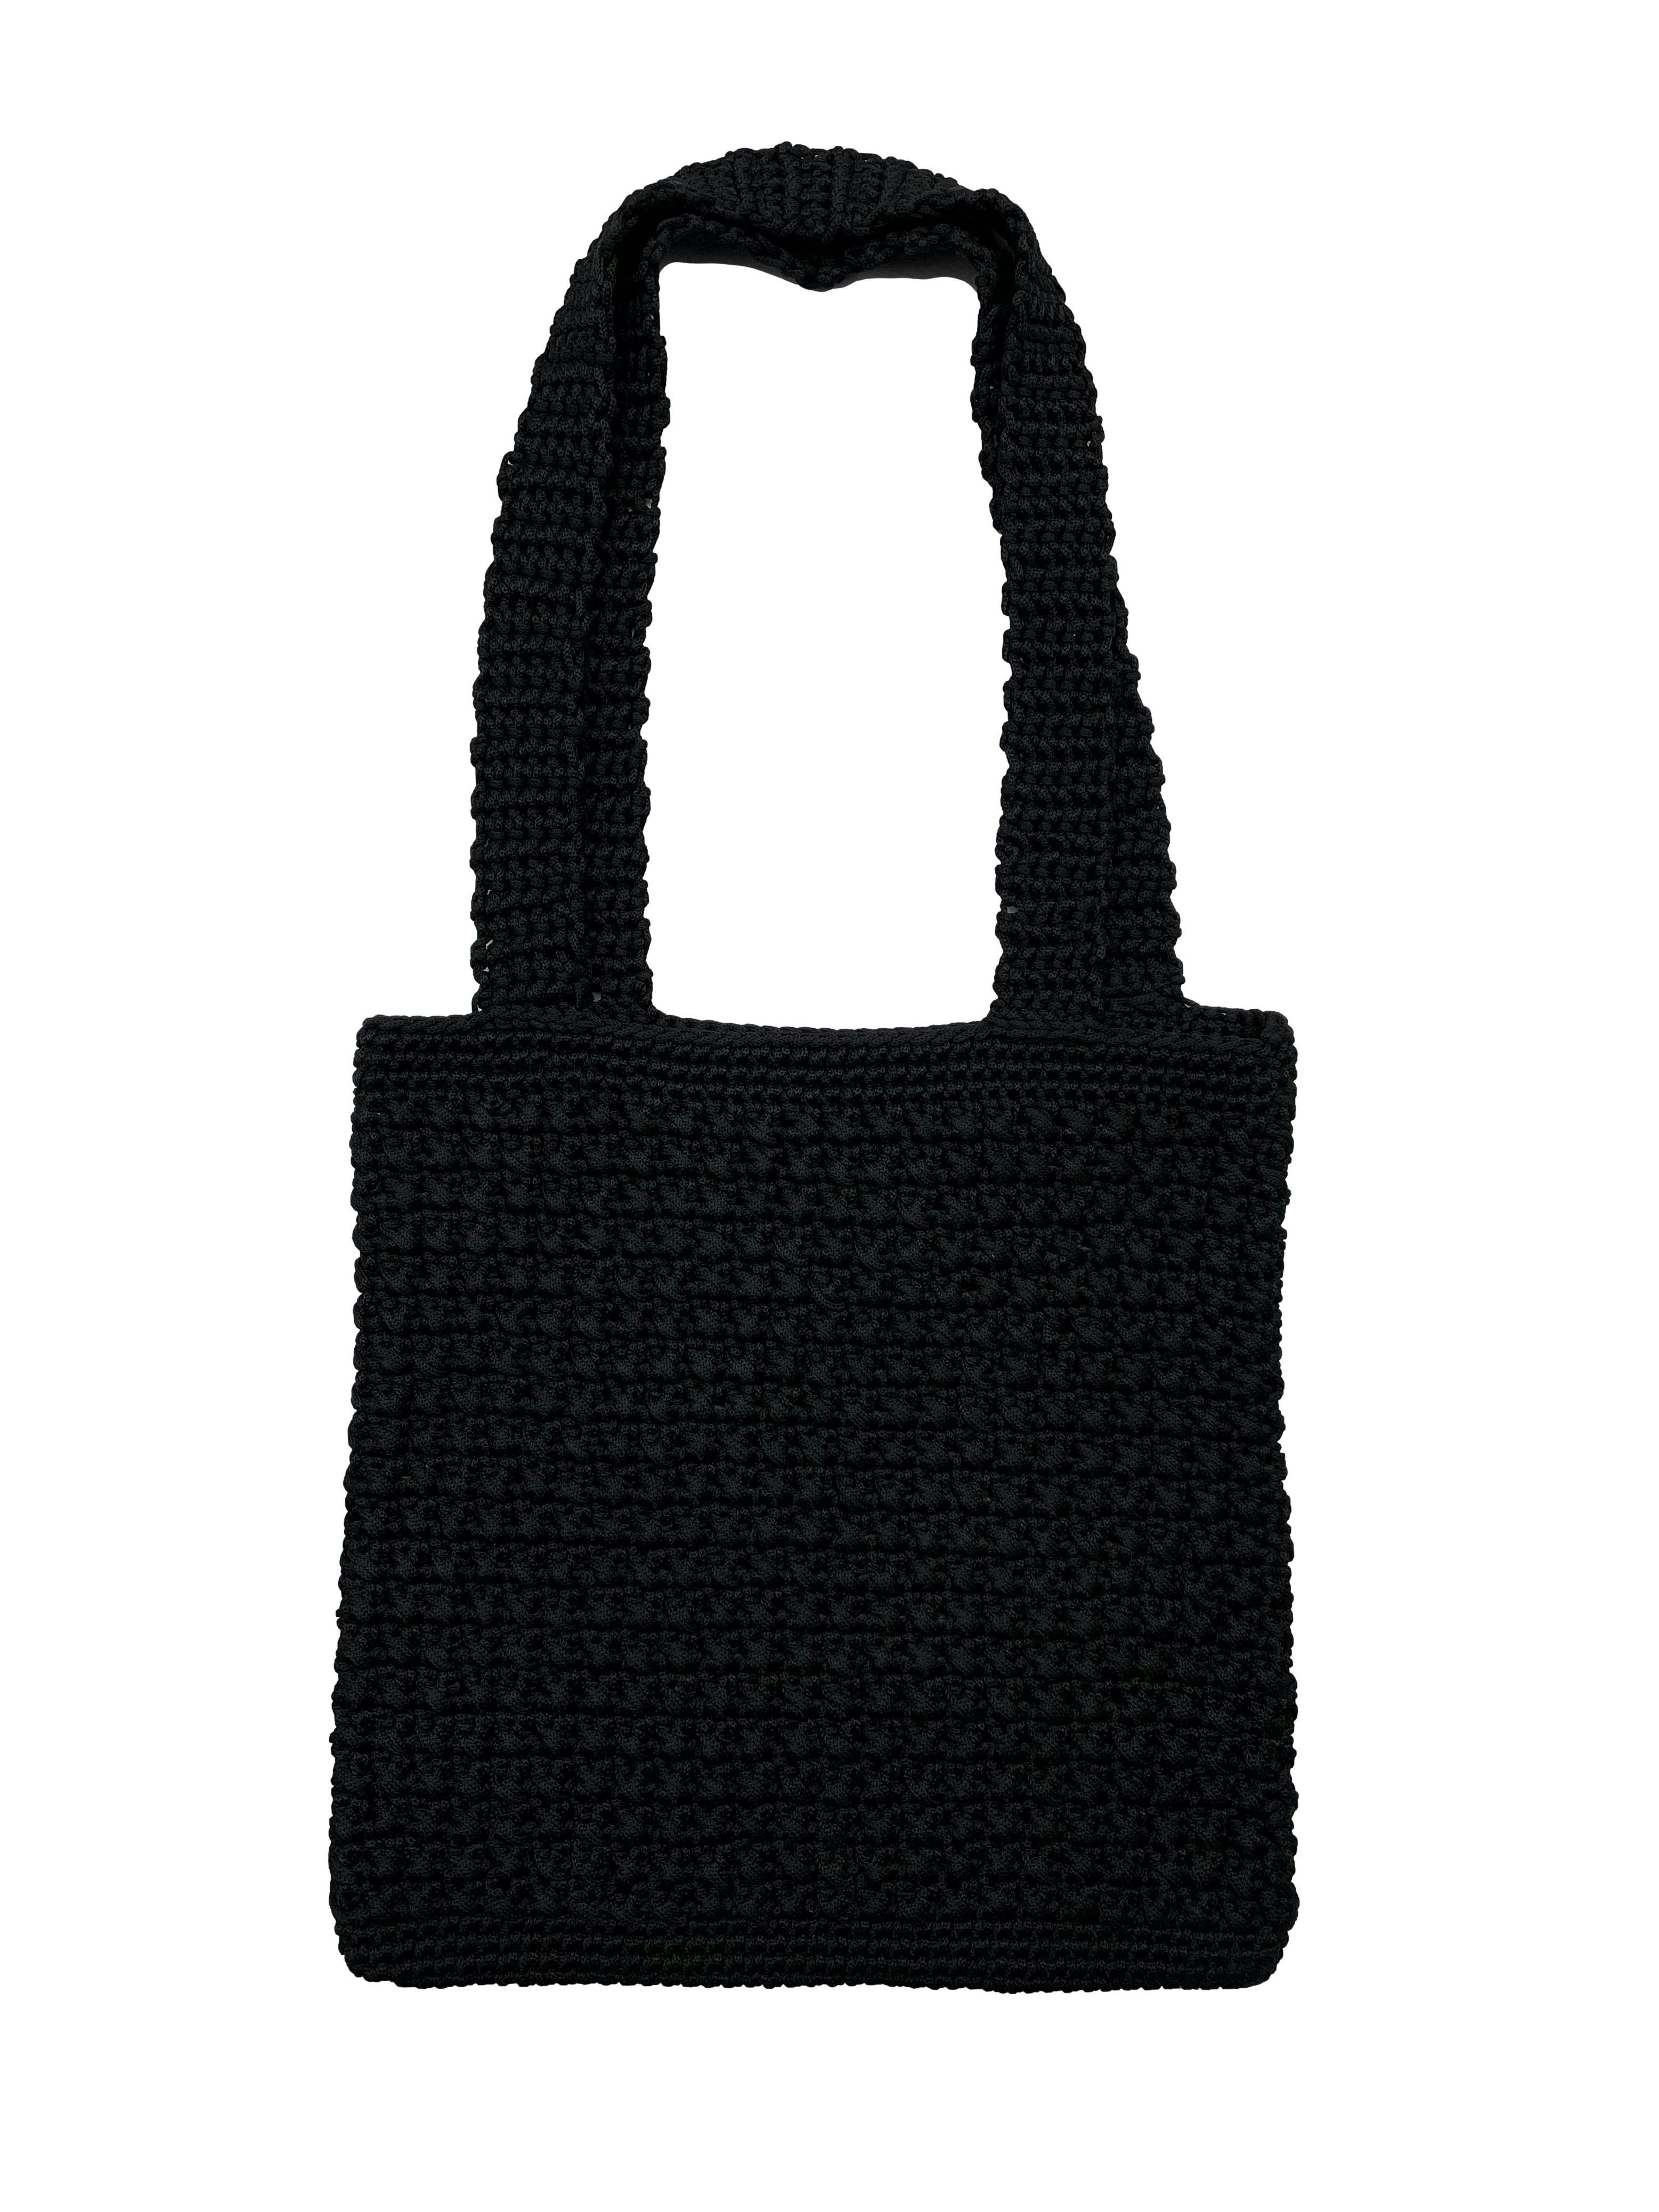 Tote bag negro a crochet, doble asa. Medidas sin asa 32x35cm 